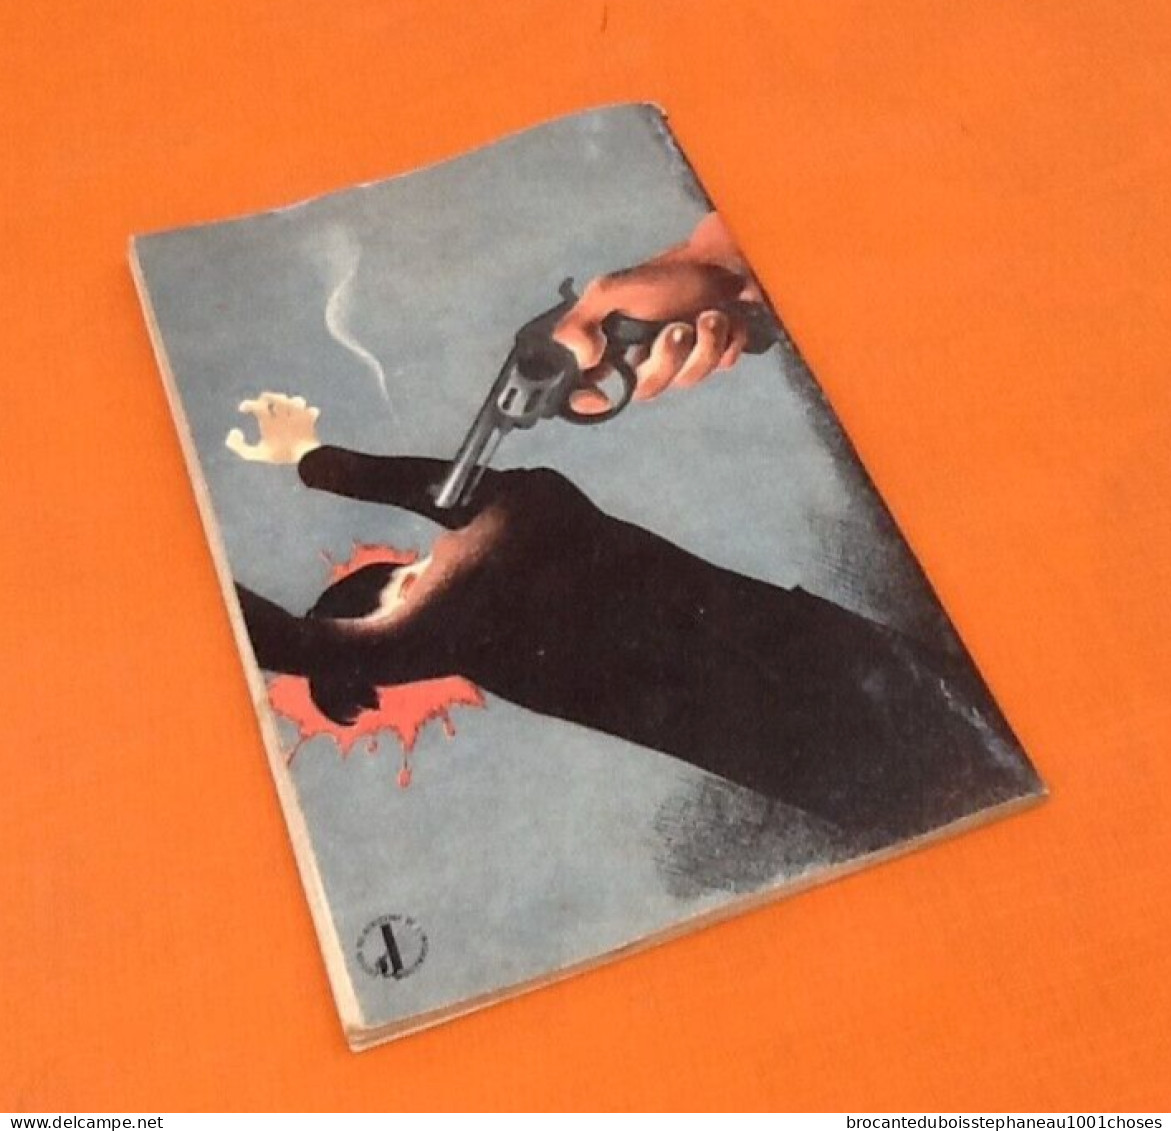 L' abcès bolchevique  Brochure de propagande (vers 1941)